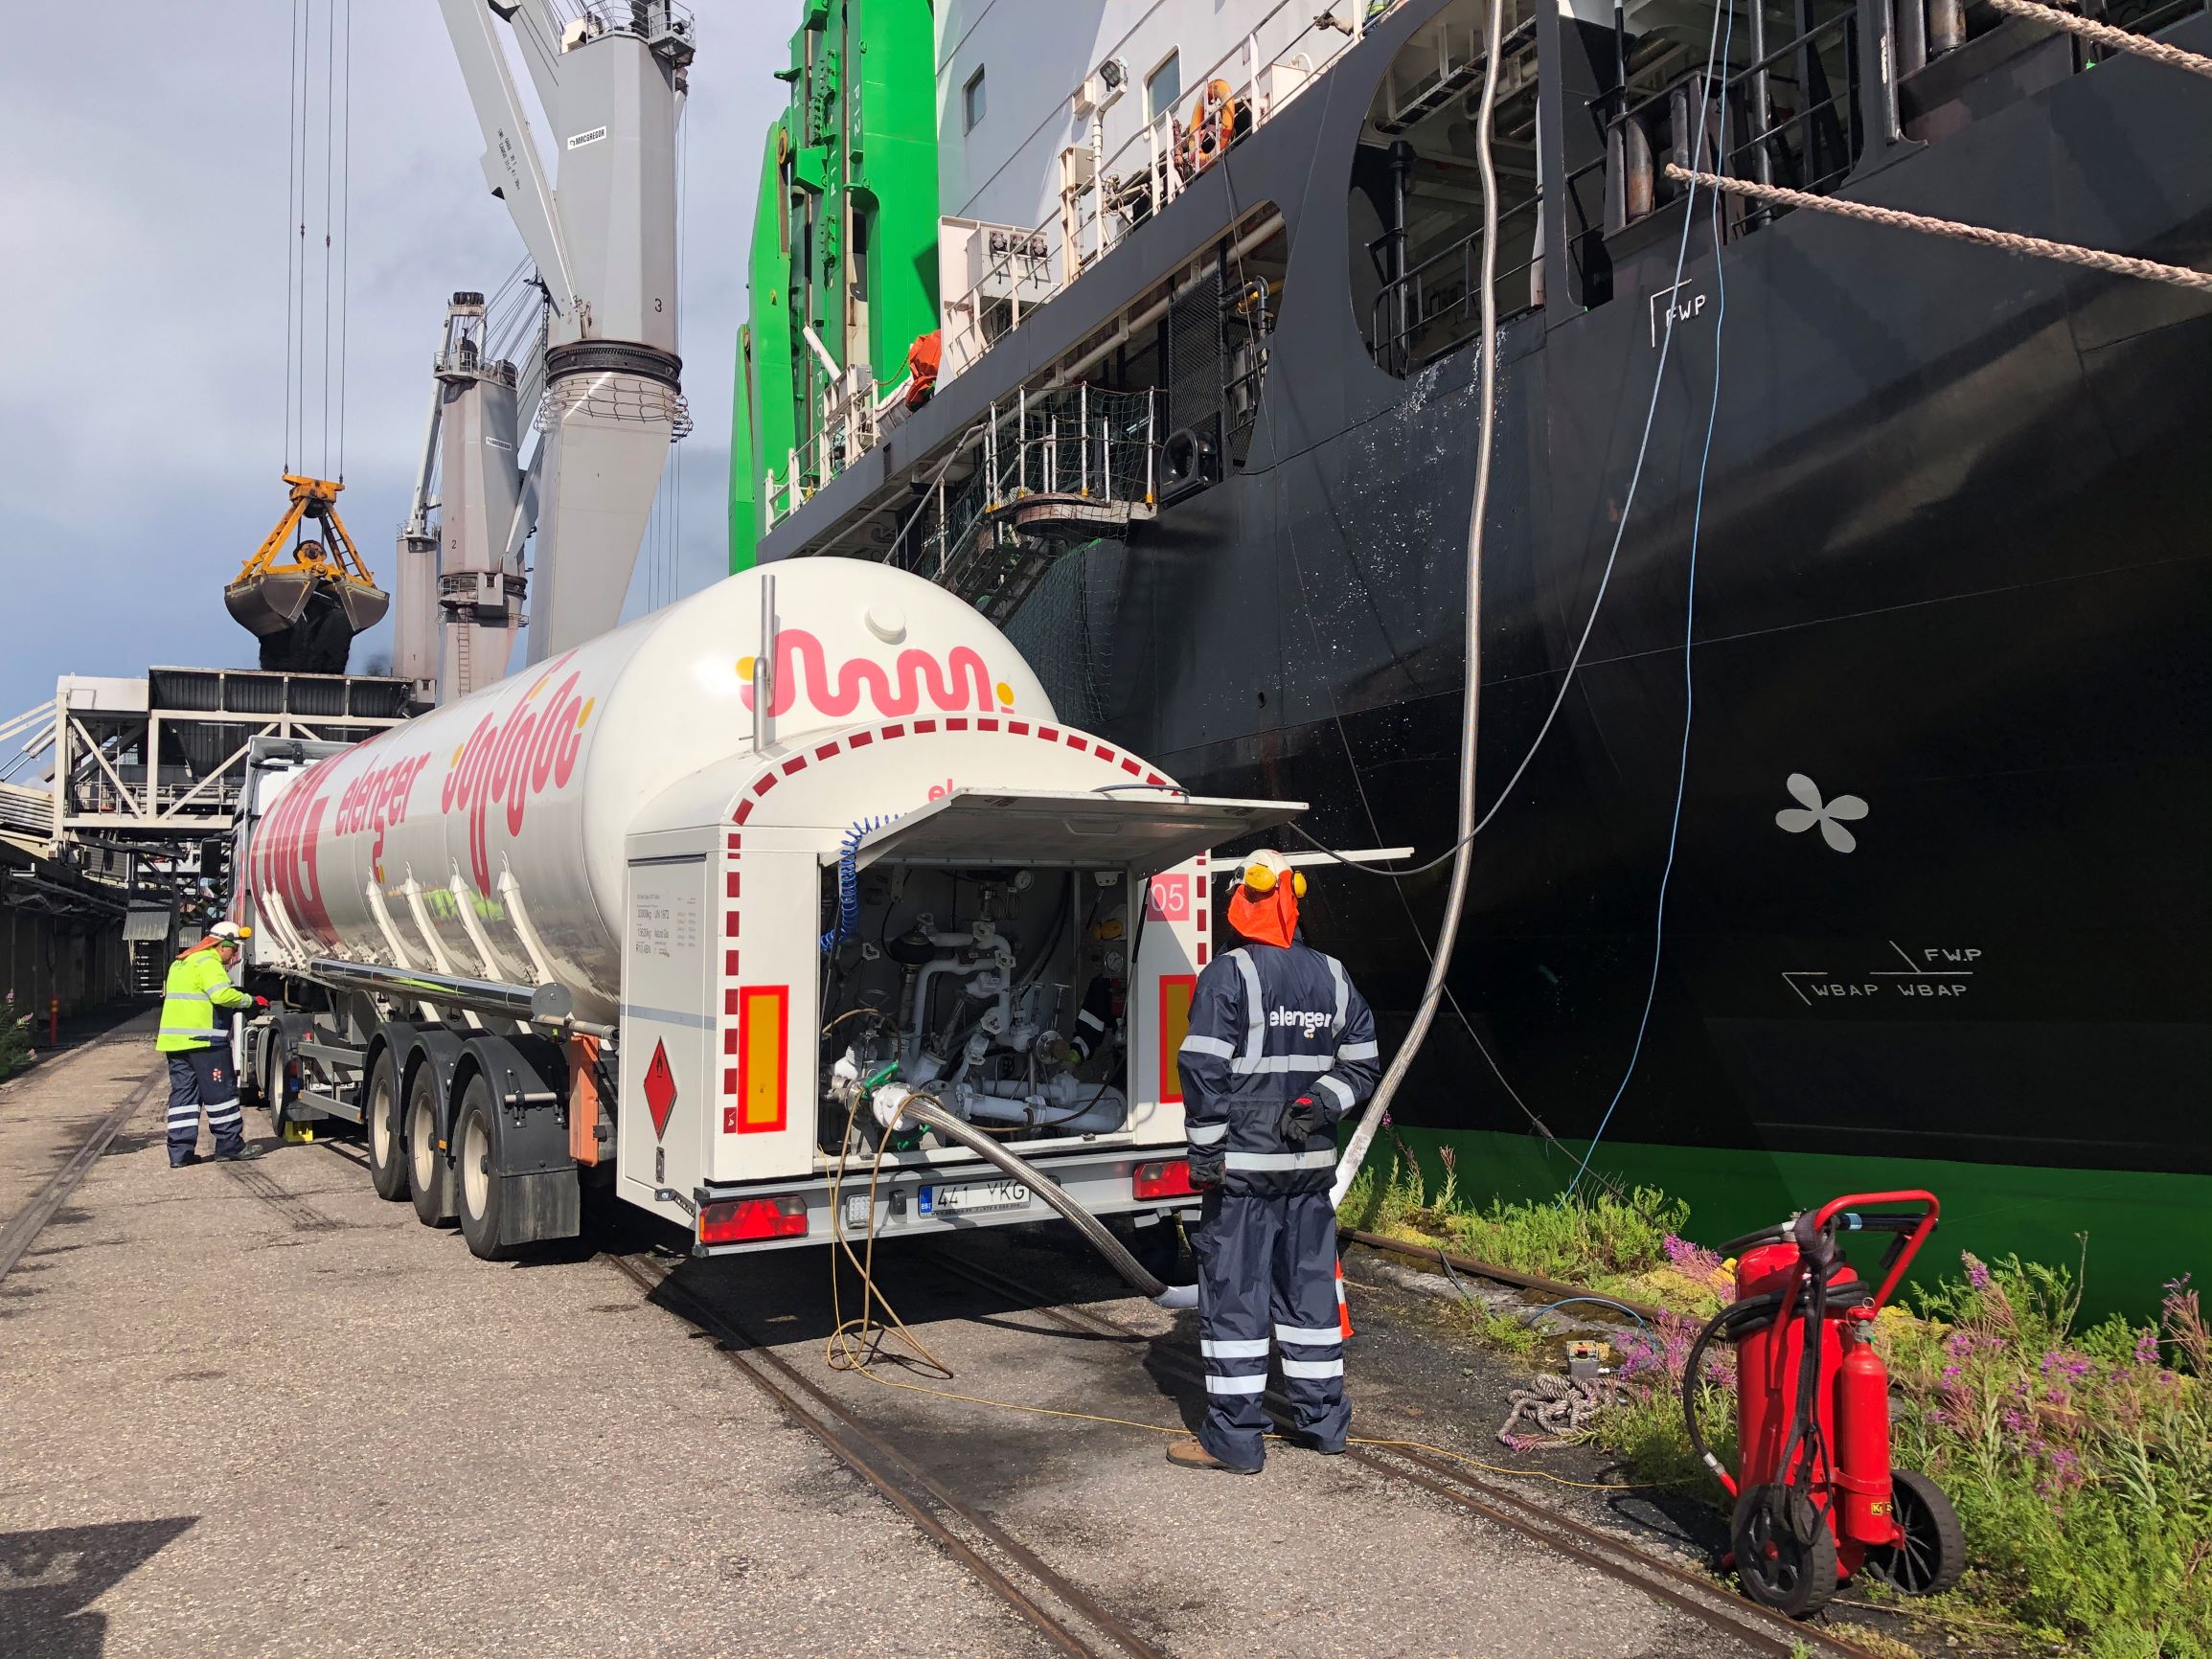 Eesti Gaas starts LNG bunkering at port of Hanasaari, Finland